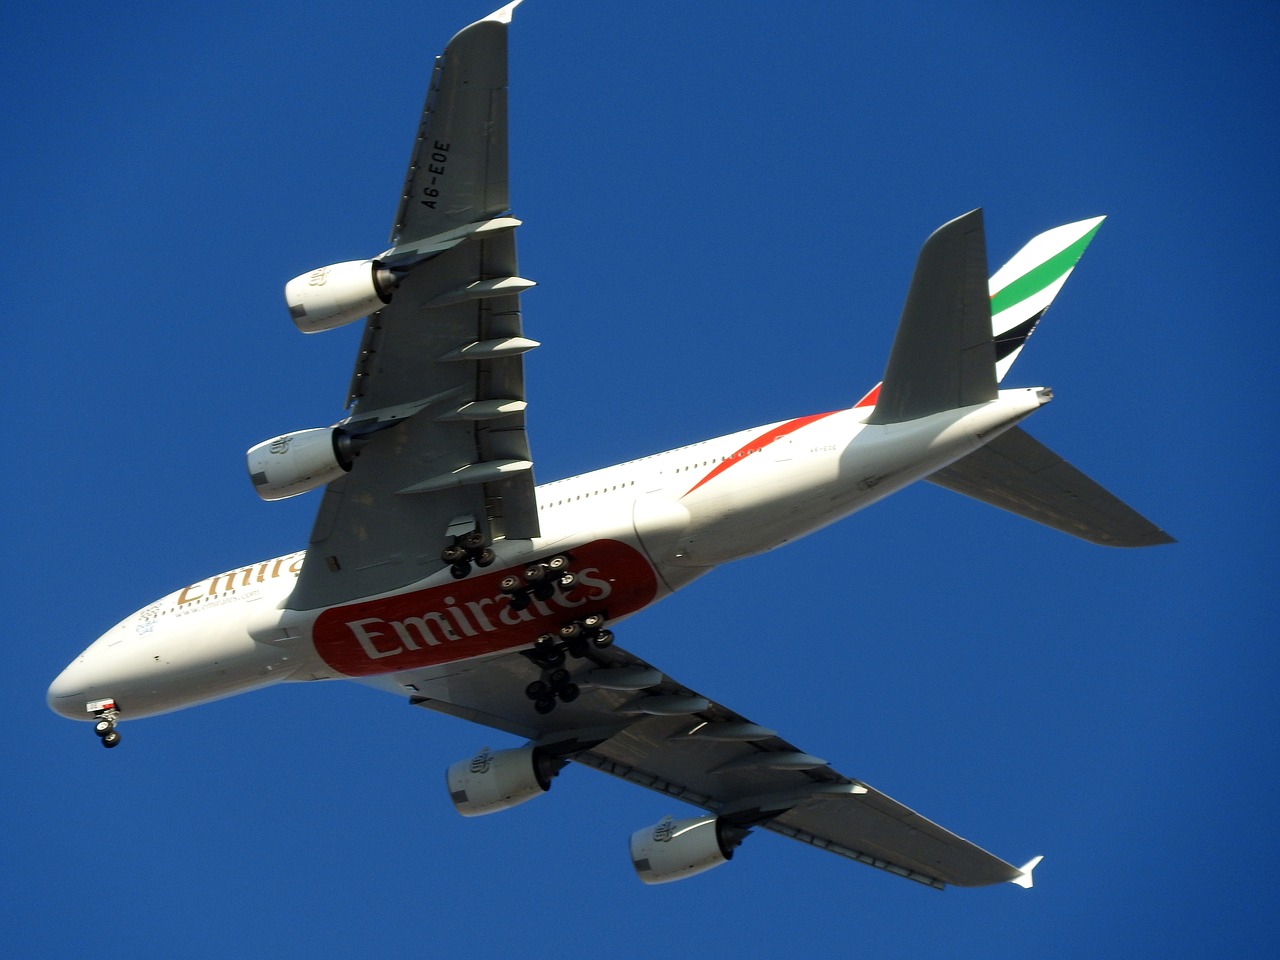 Emirates confirme la commande de 20 A380